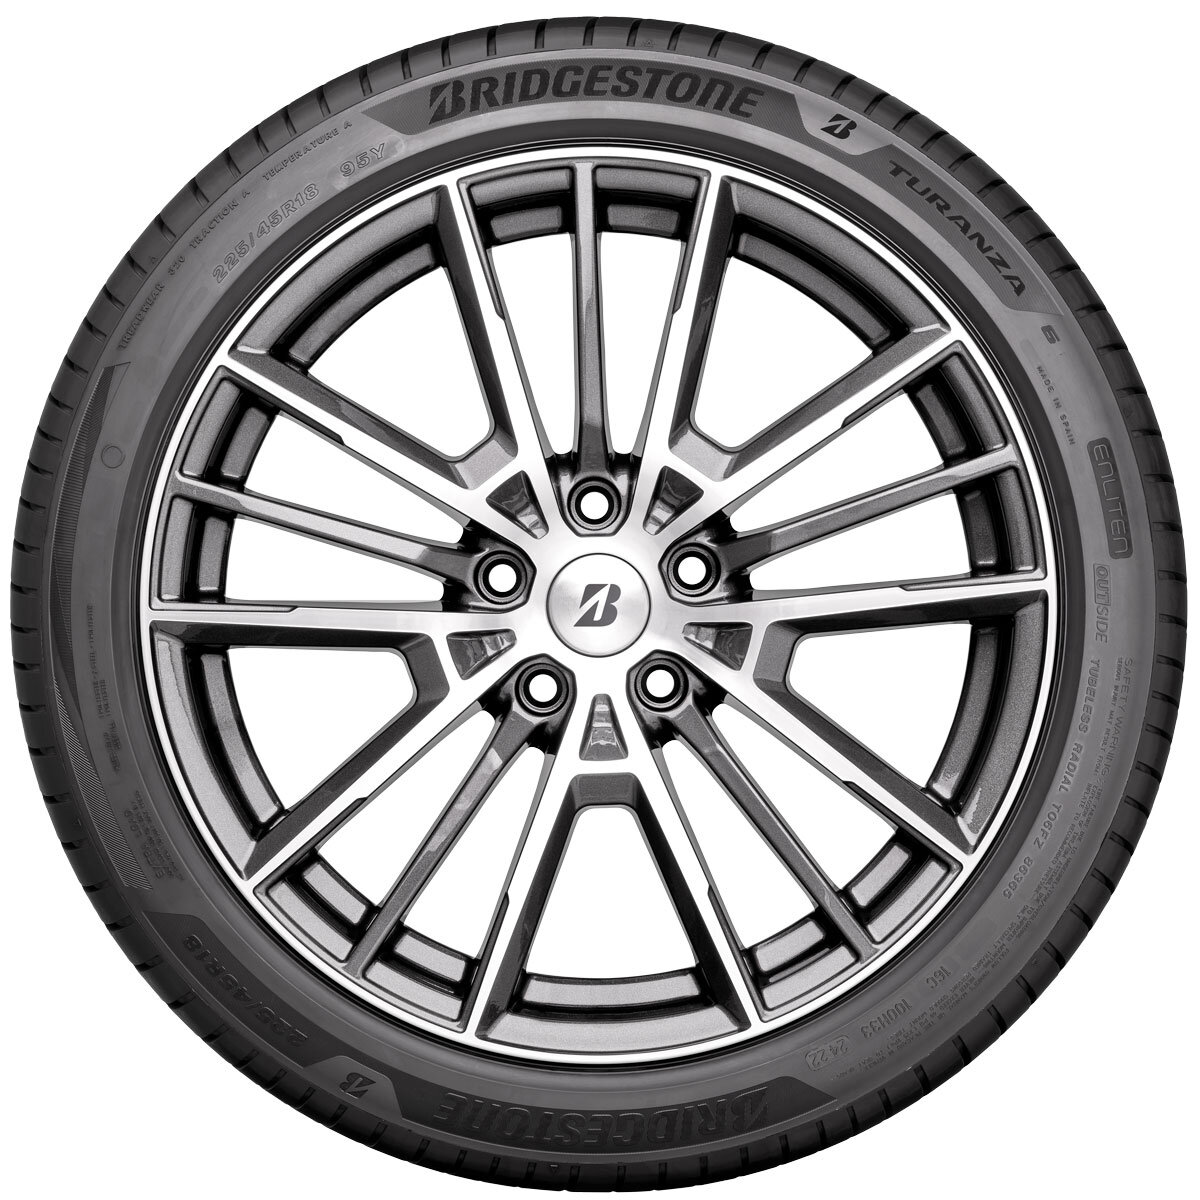 Bridgestone 215/55 R16 V (93) TURANZA TUR6